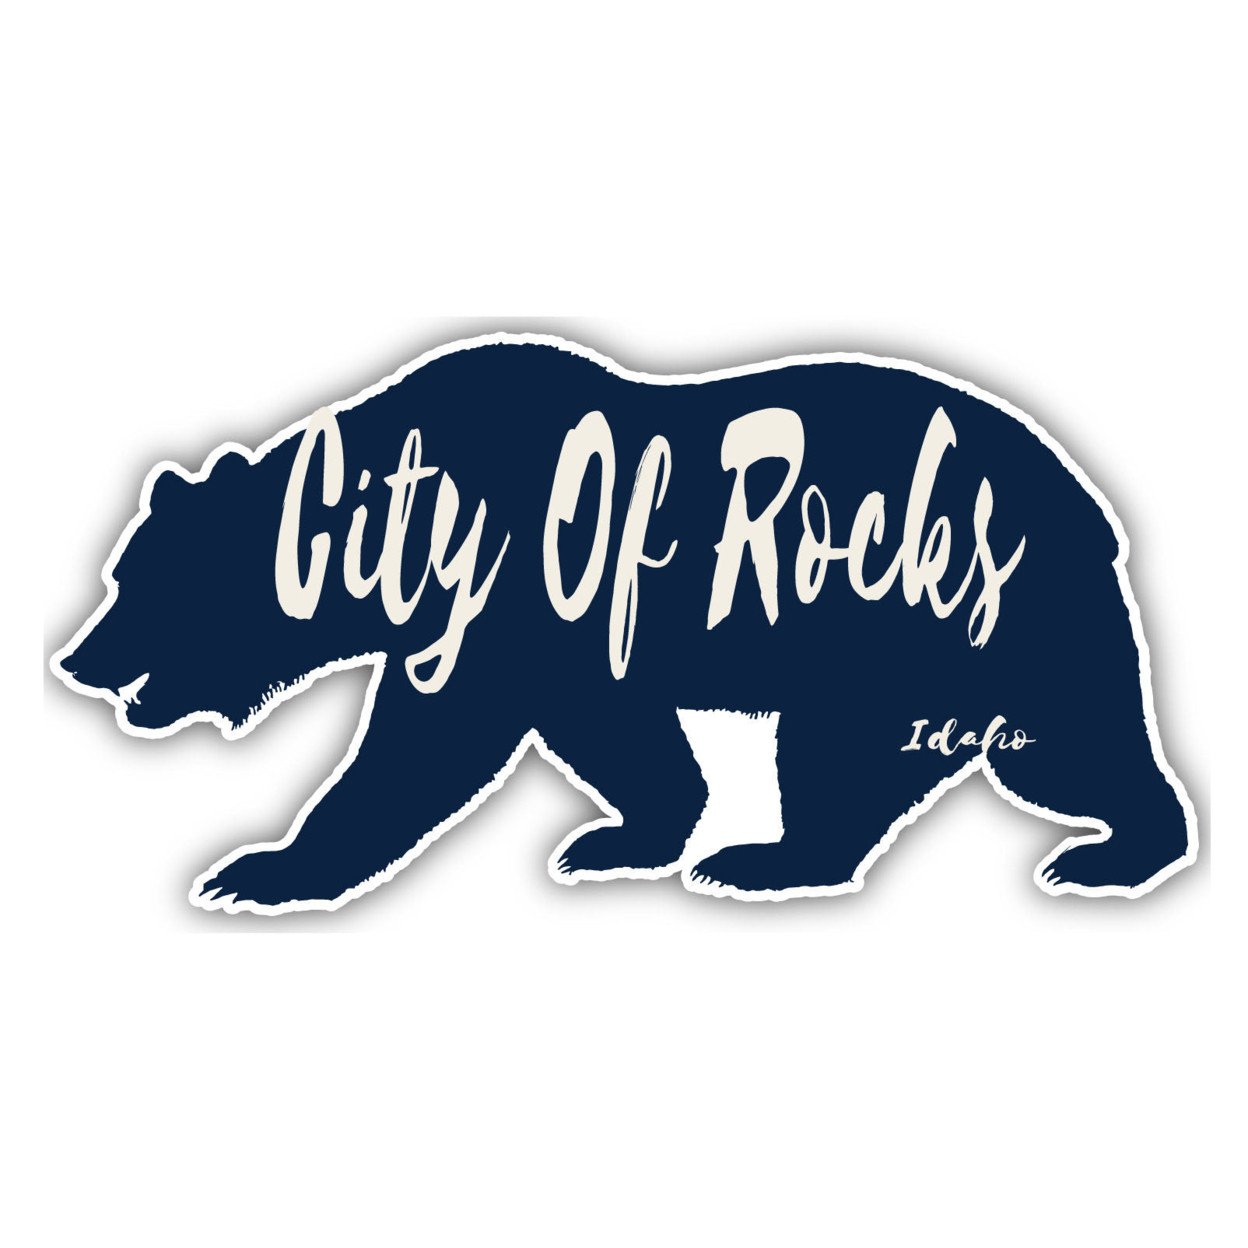 City Of Rocks Idaho Souvenir Decorative Stickers (Choose Theme And Size) - Single Unit, 6-Inch, Tent